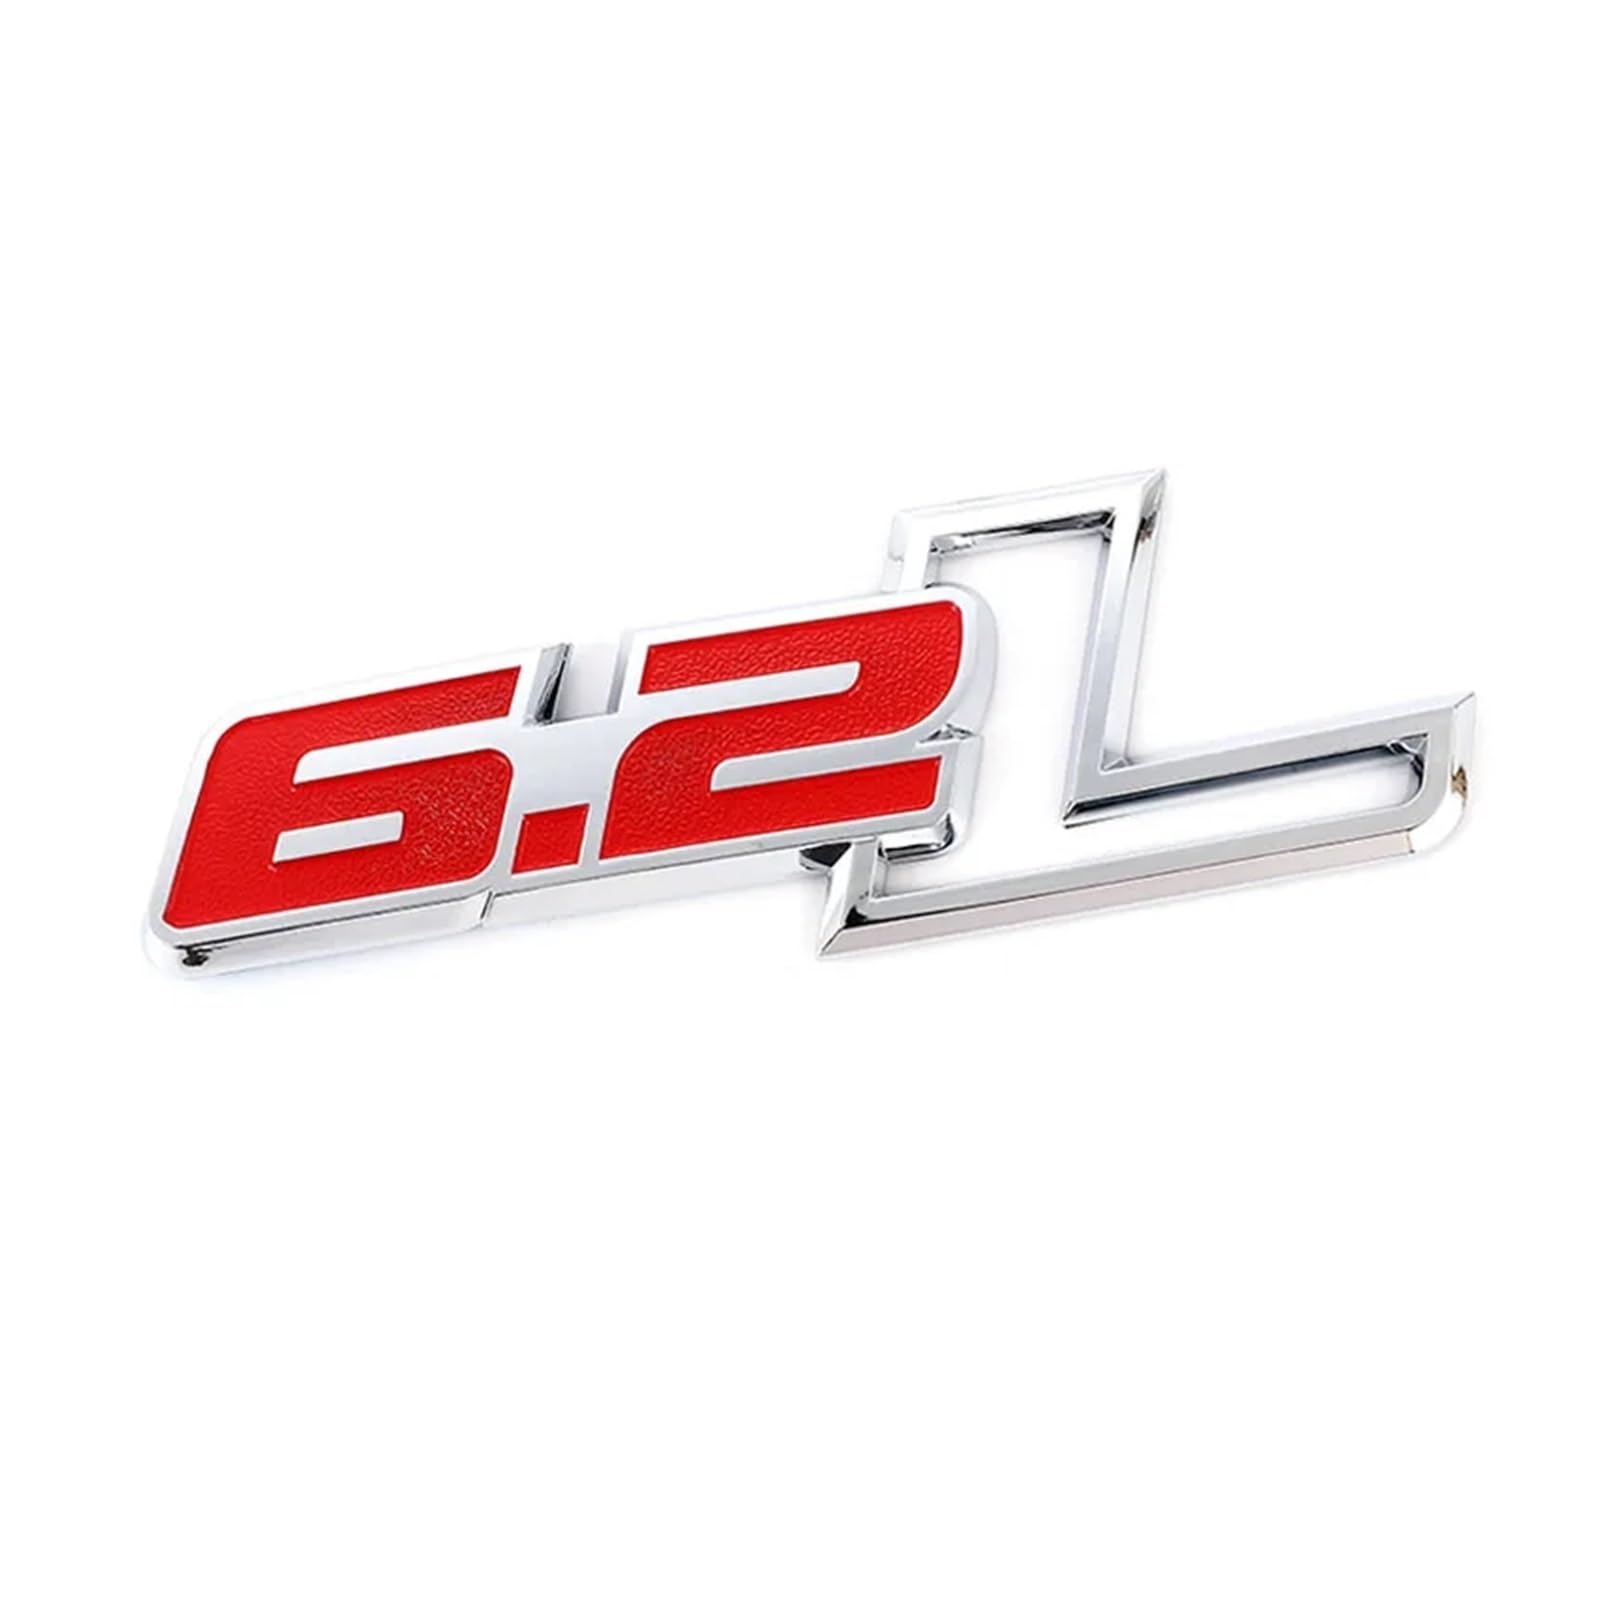 AQXYWQOL ABS-Autoaufkleber, Emblem, Kofferraumabzeichen, Aufkleber, kompatibel mit F150 6,2 l, C7 2011–2015, 6,2 l, Auto-Styling Farbe ist konstant, verblasst nicht und beschädigt(6.2L-02) von AQXYWQOL